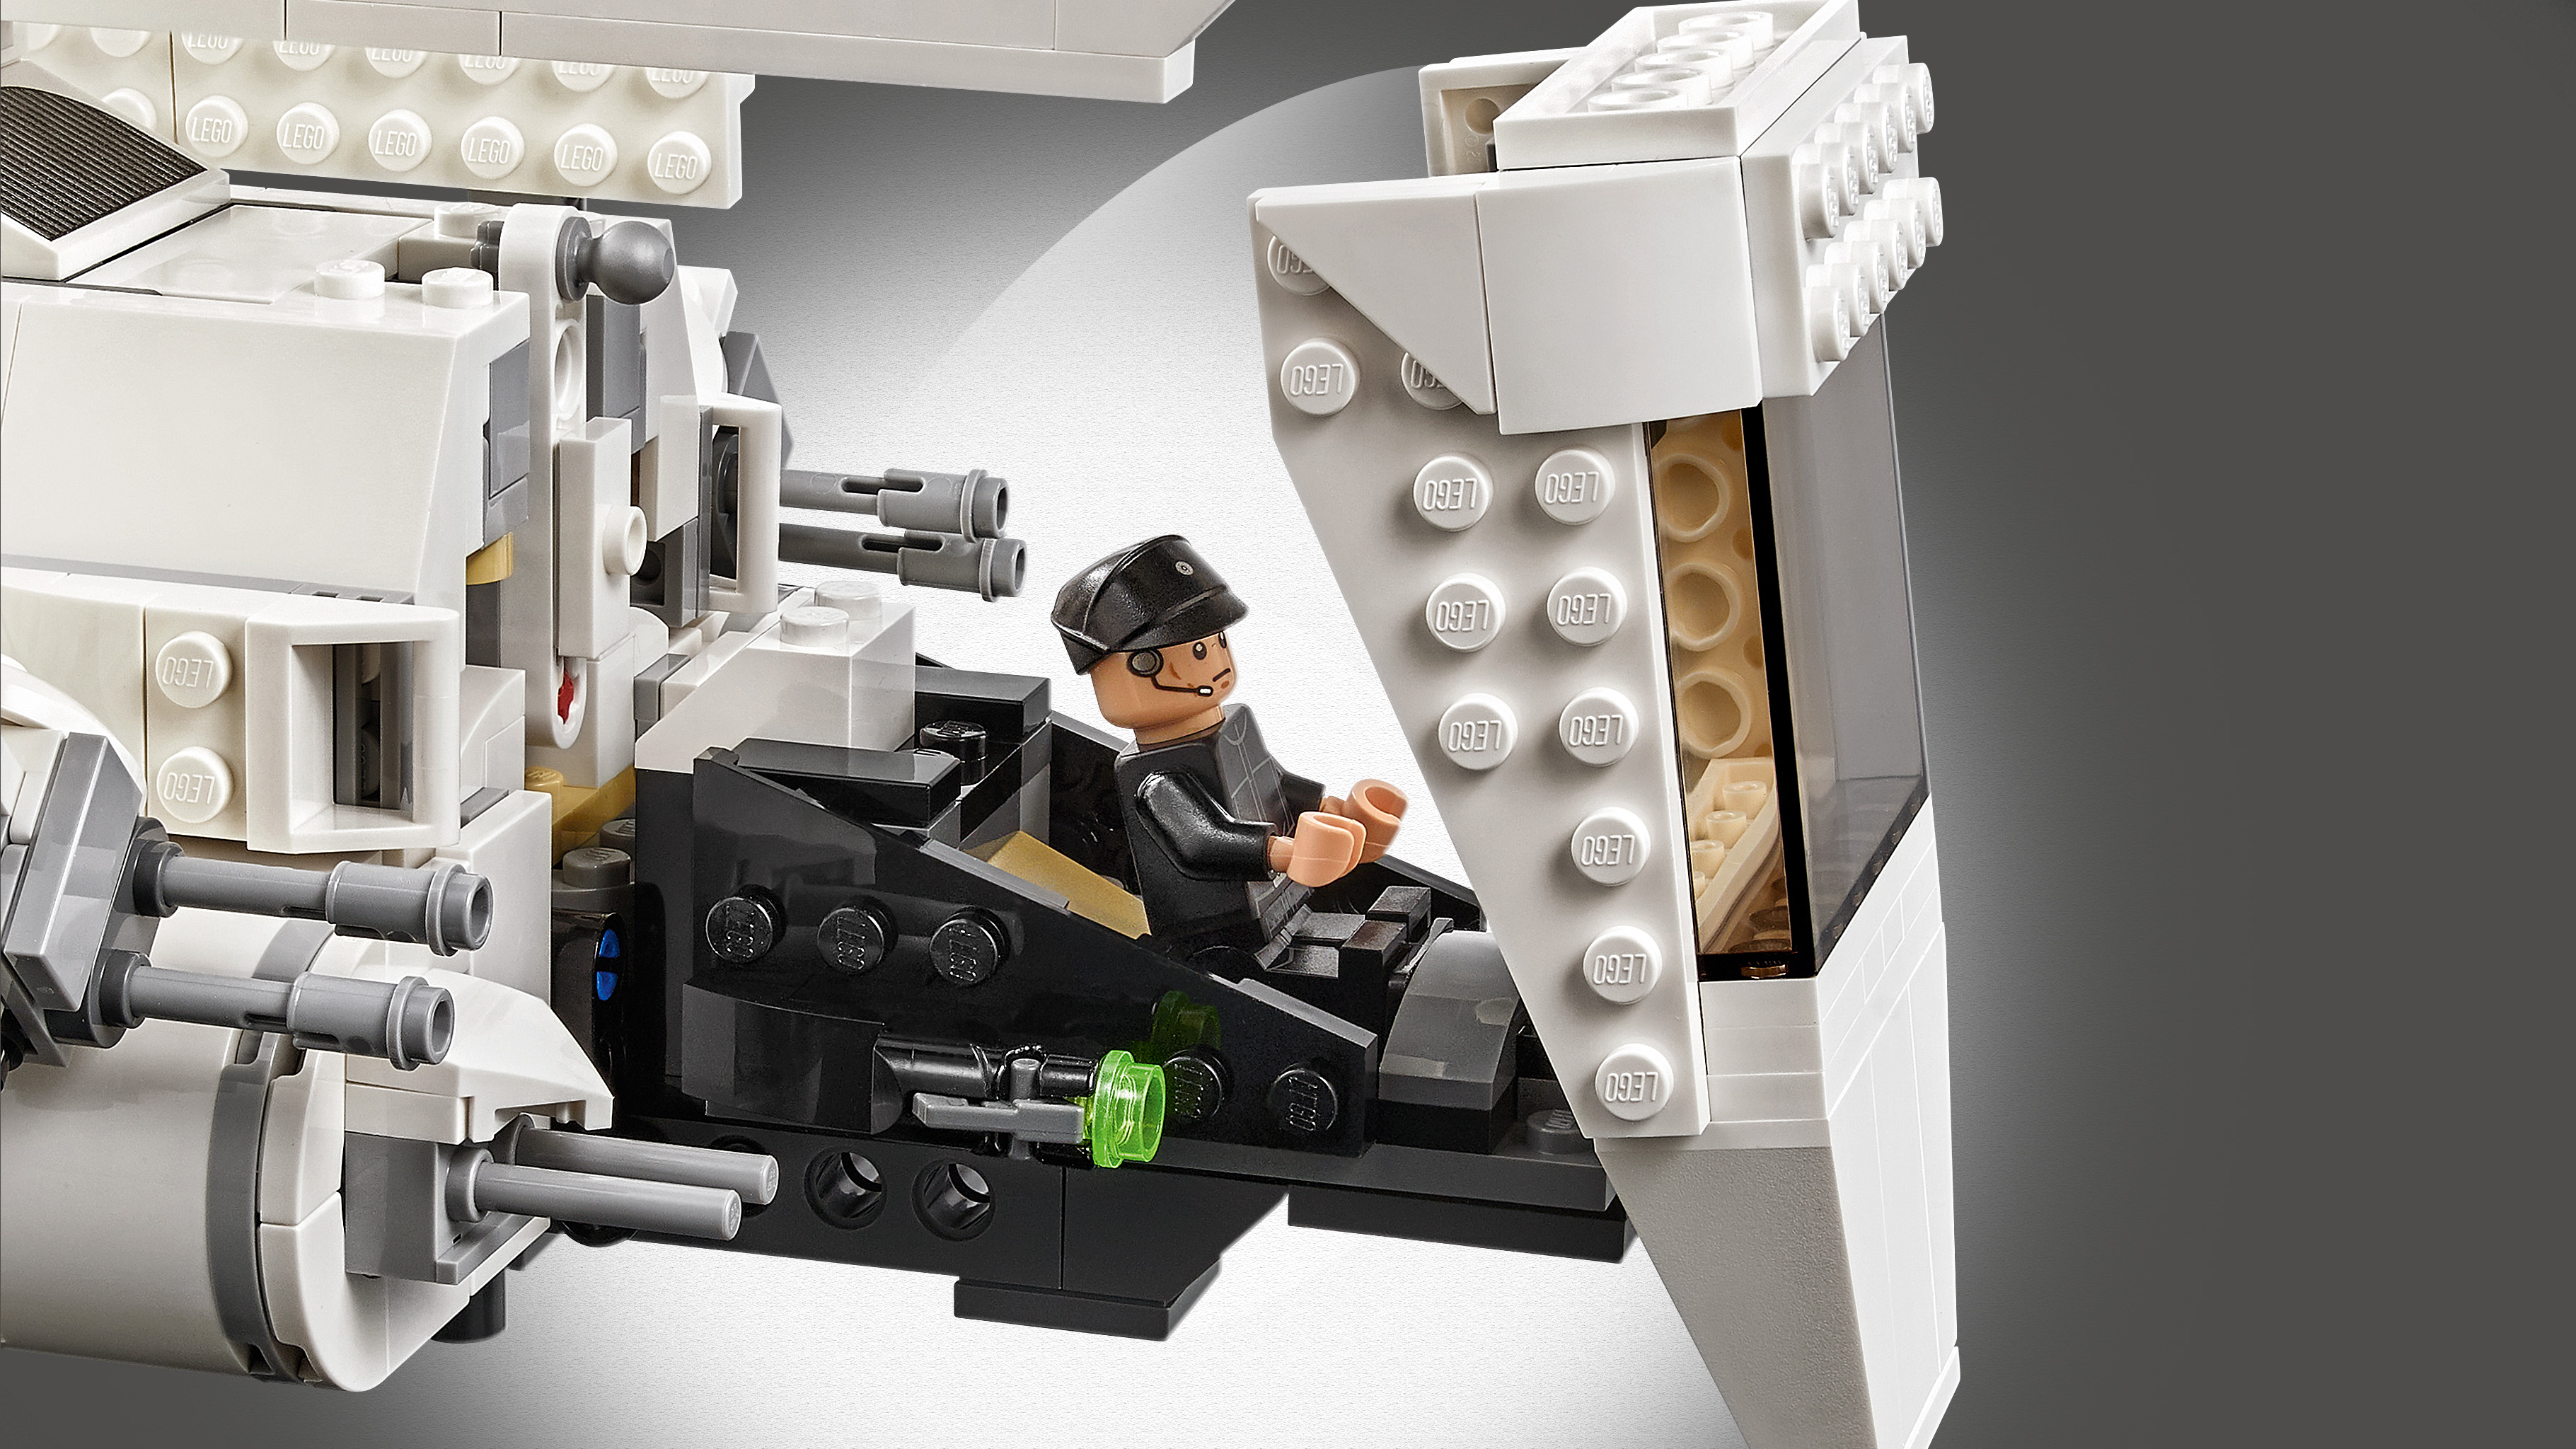 LEGO Star Wars 75302 - Imperial Shuttle